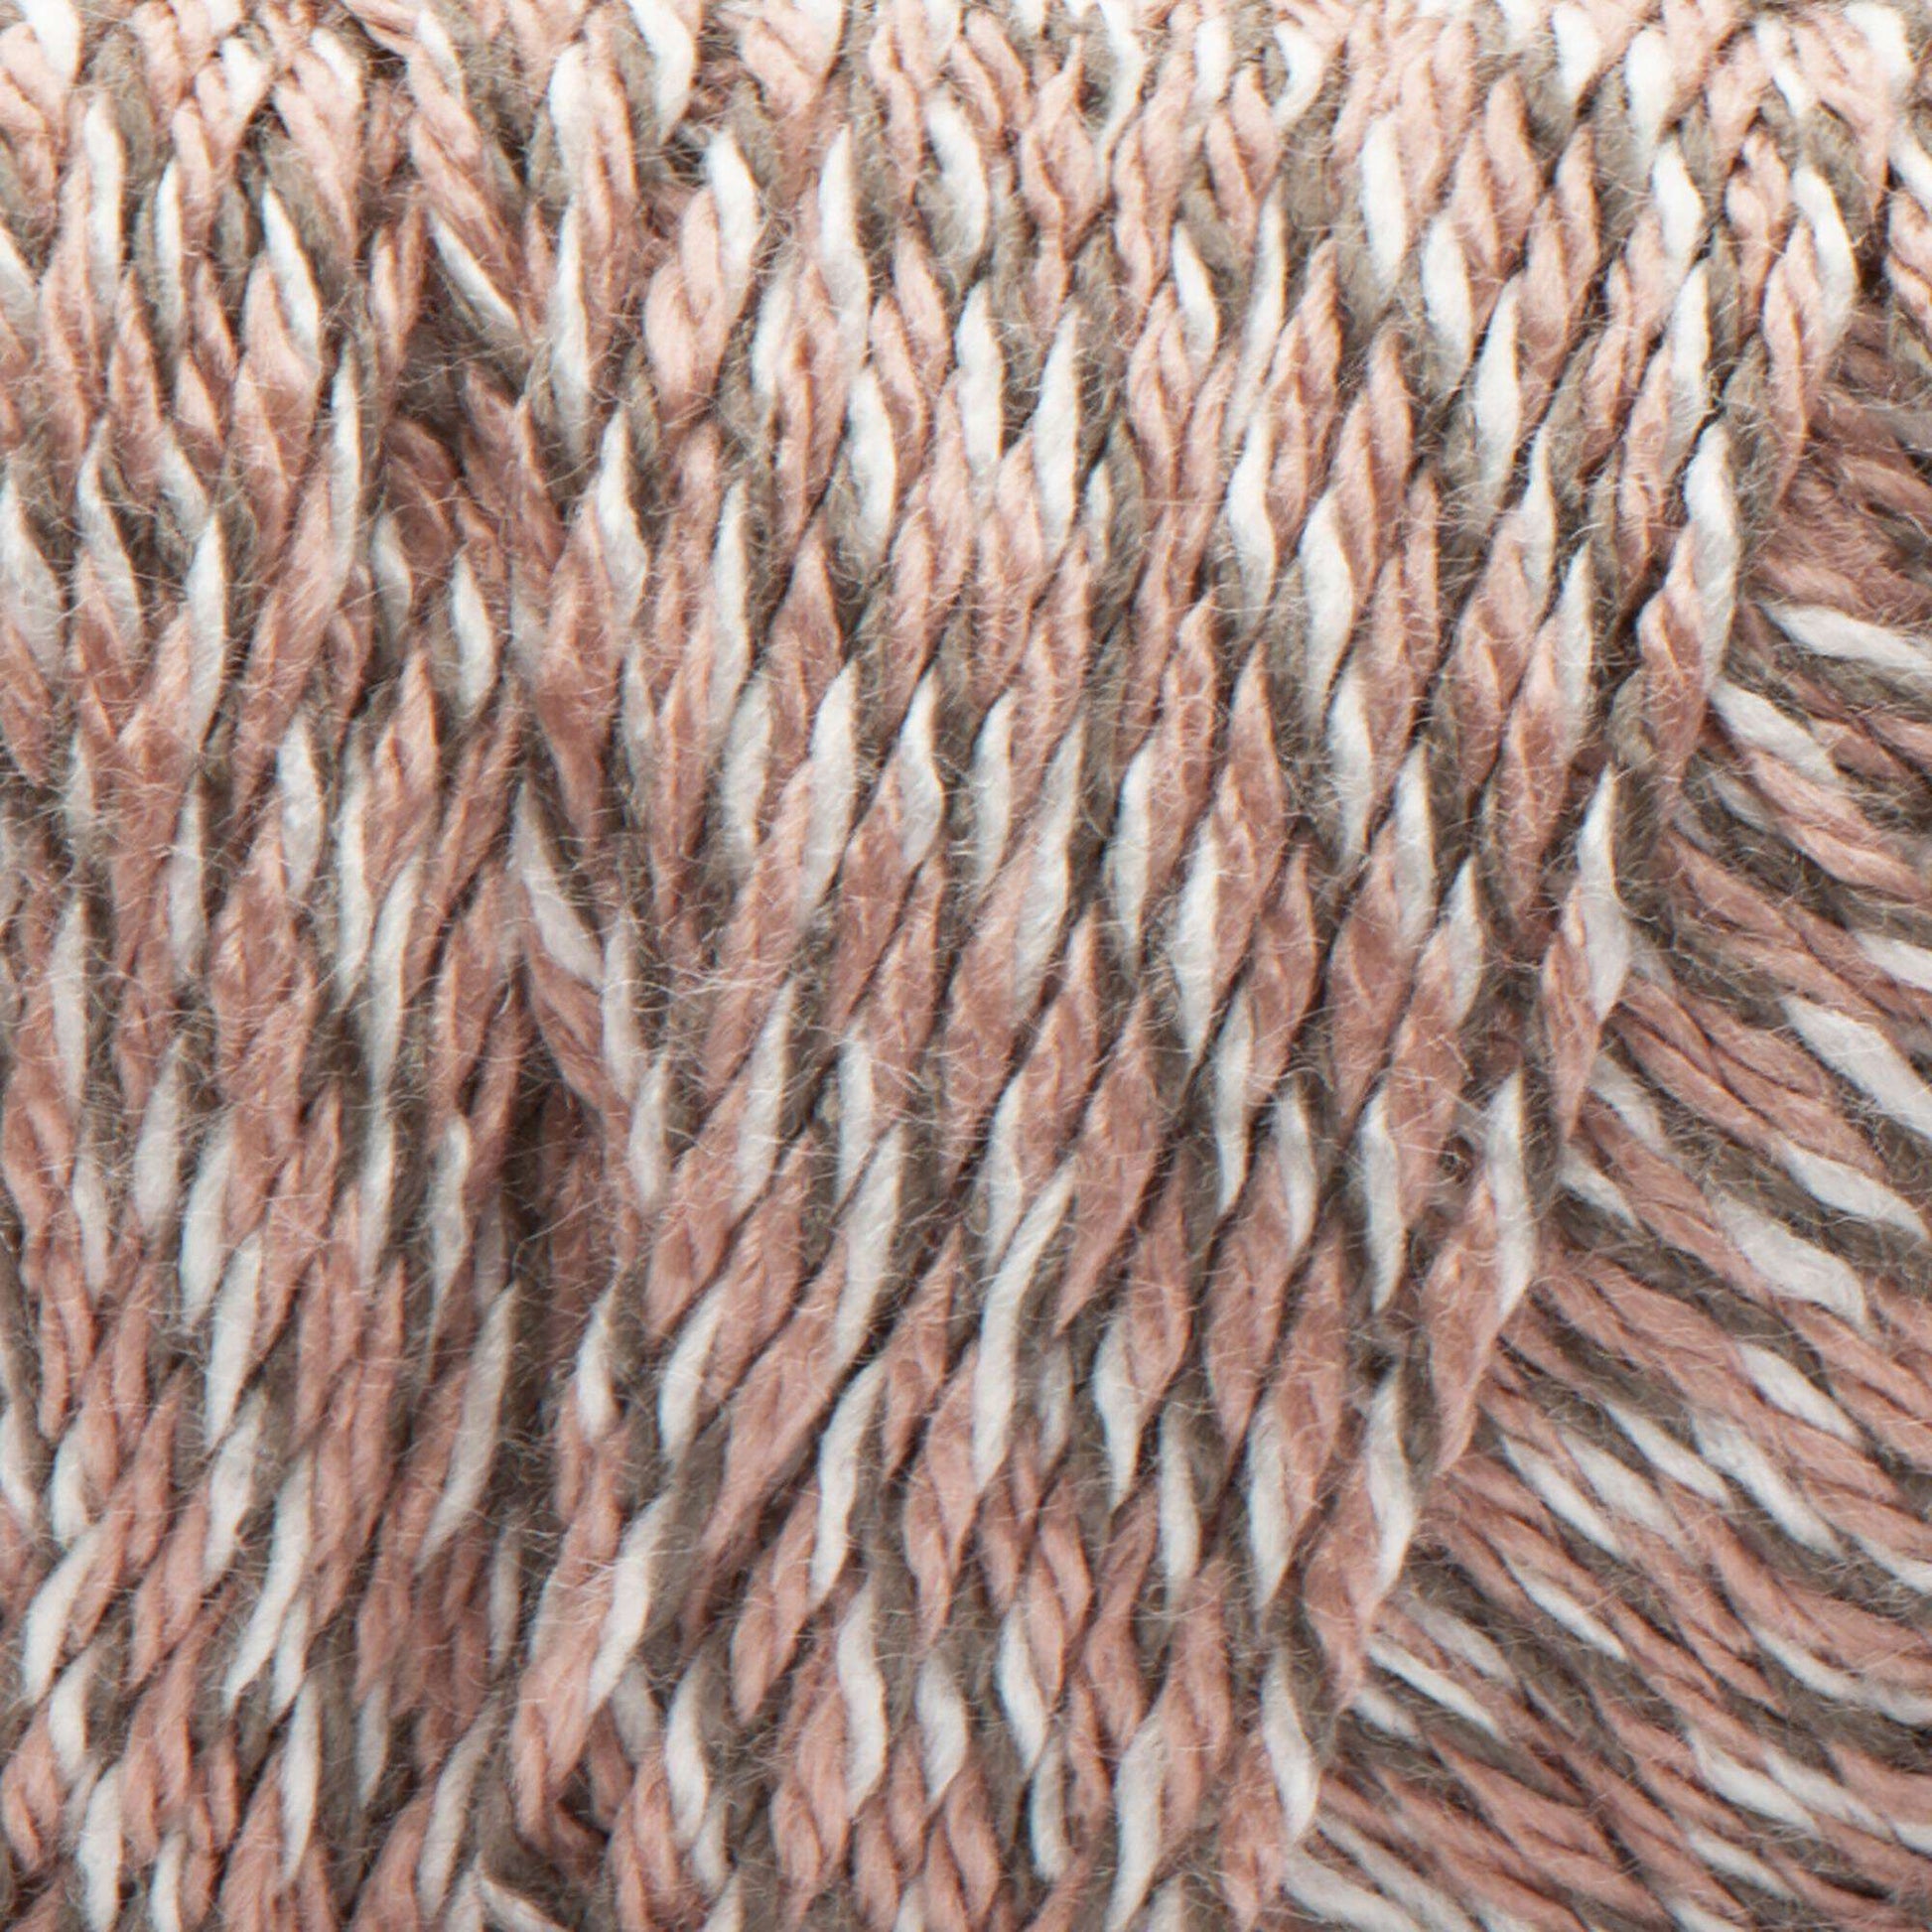 Caron Simply Soft Marled Yarn - Discontinued Shades